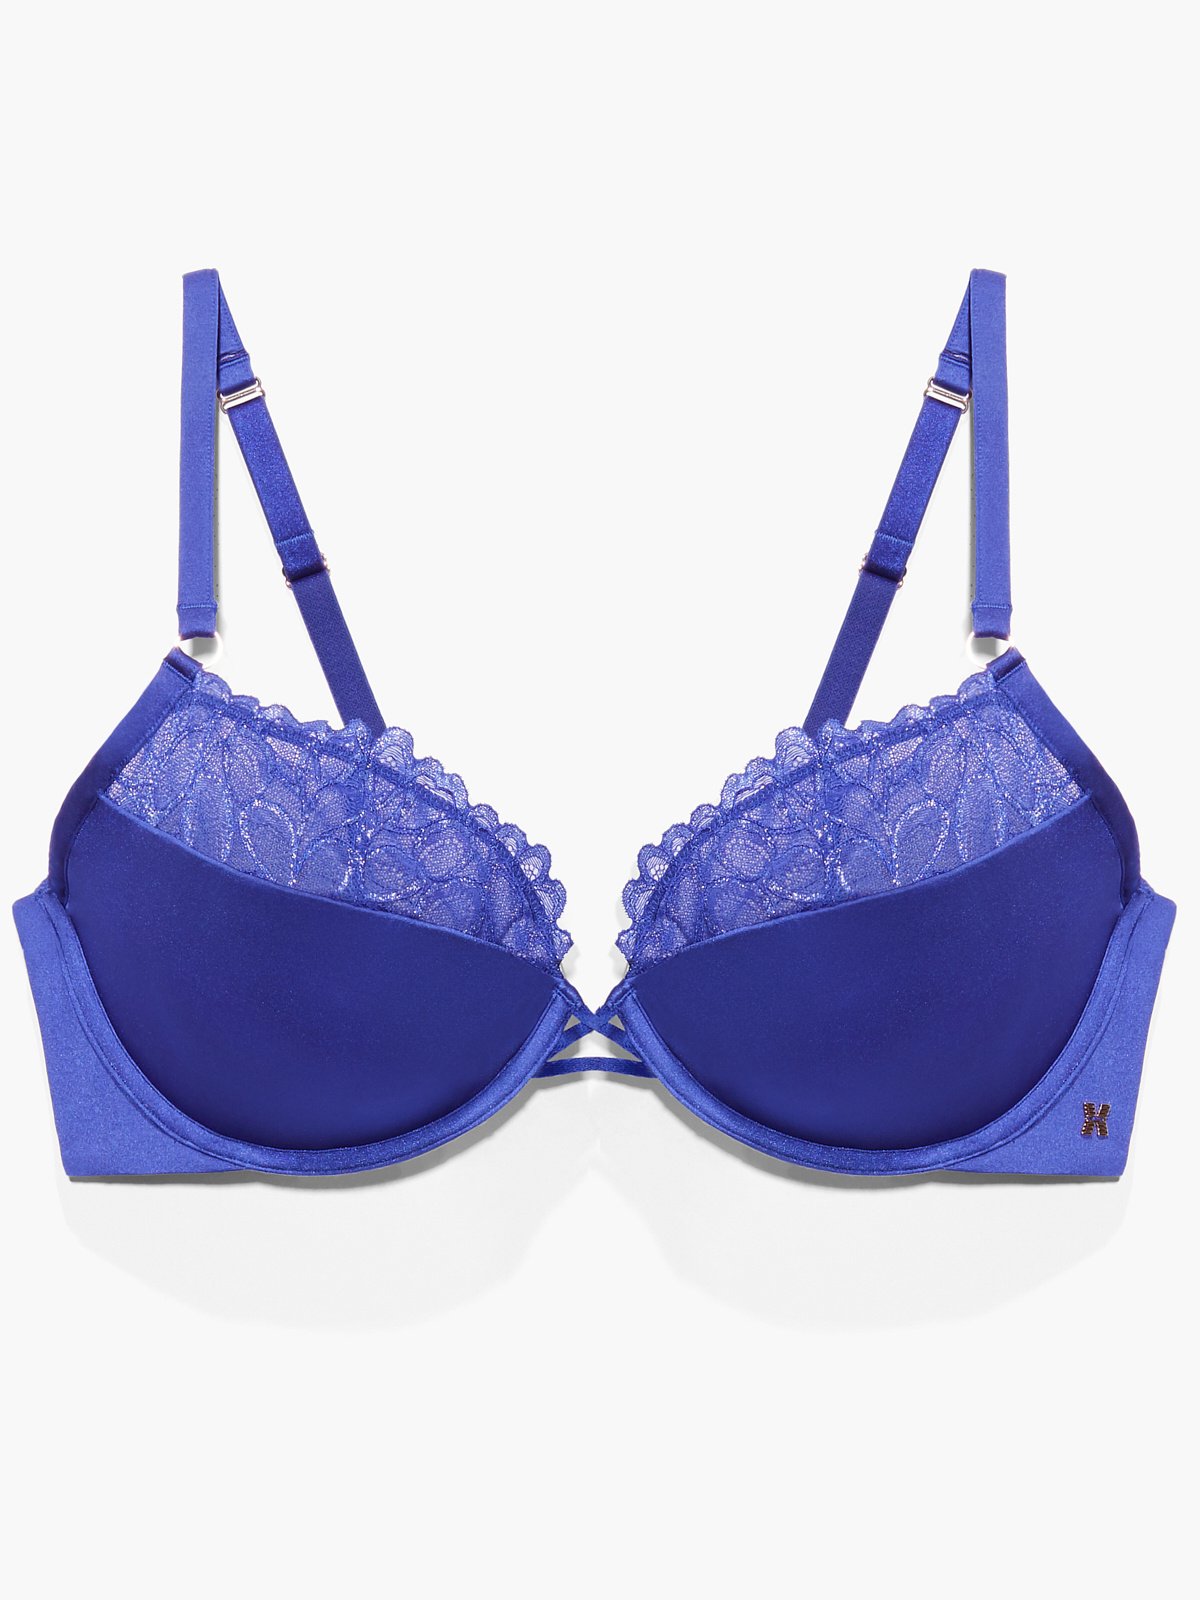 Victoria's Secret Victoria Secret Bra Blue Size 32 B - $17 (69% Off